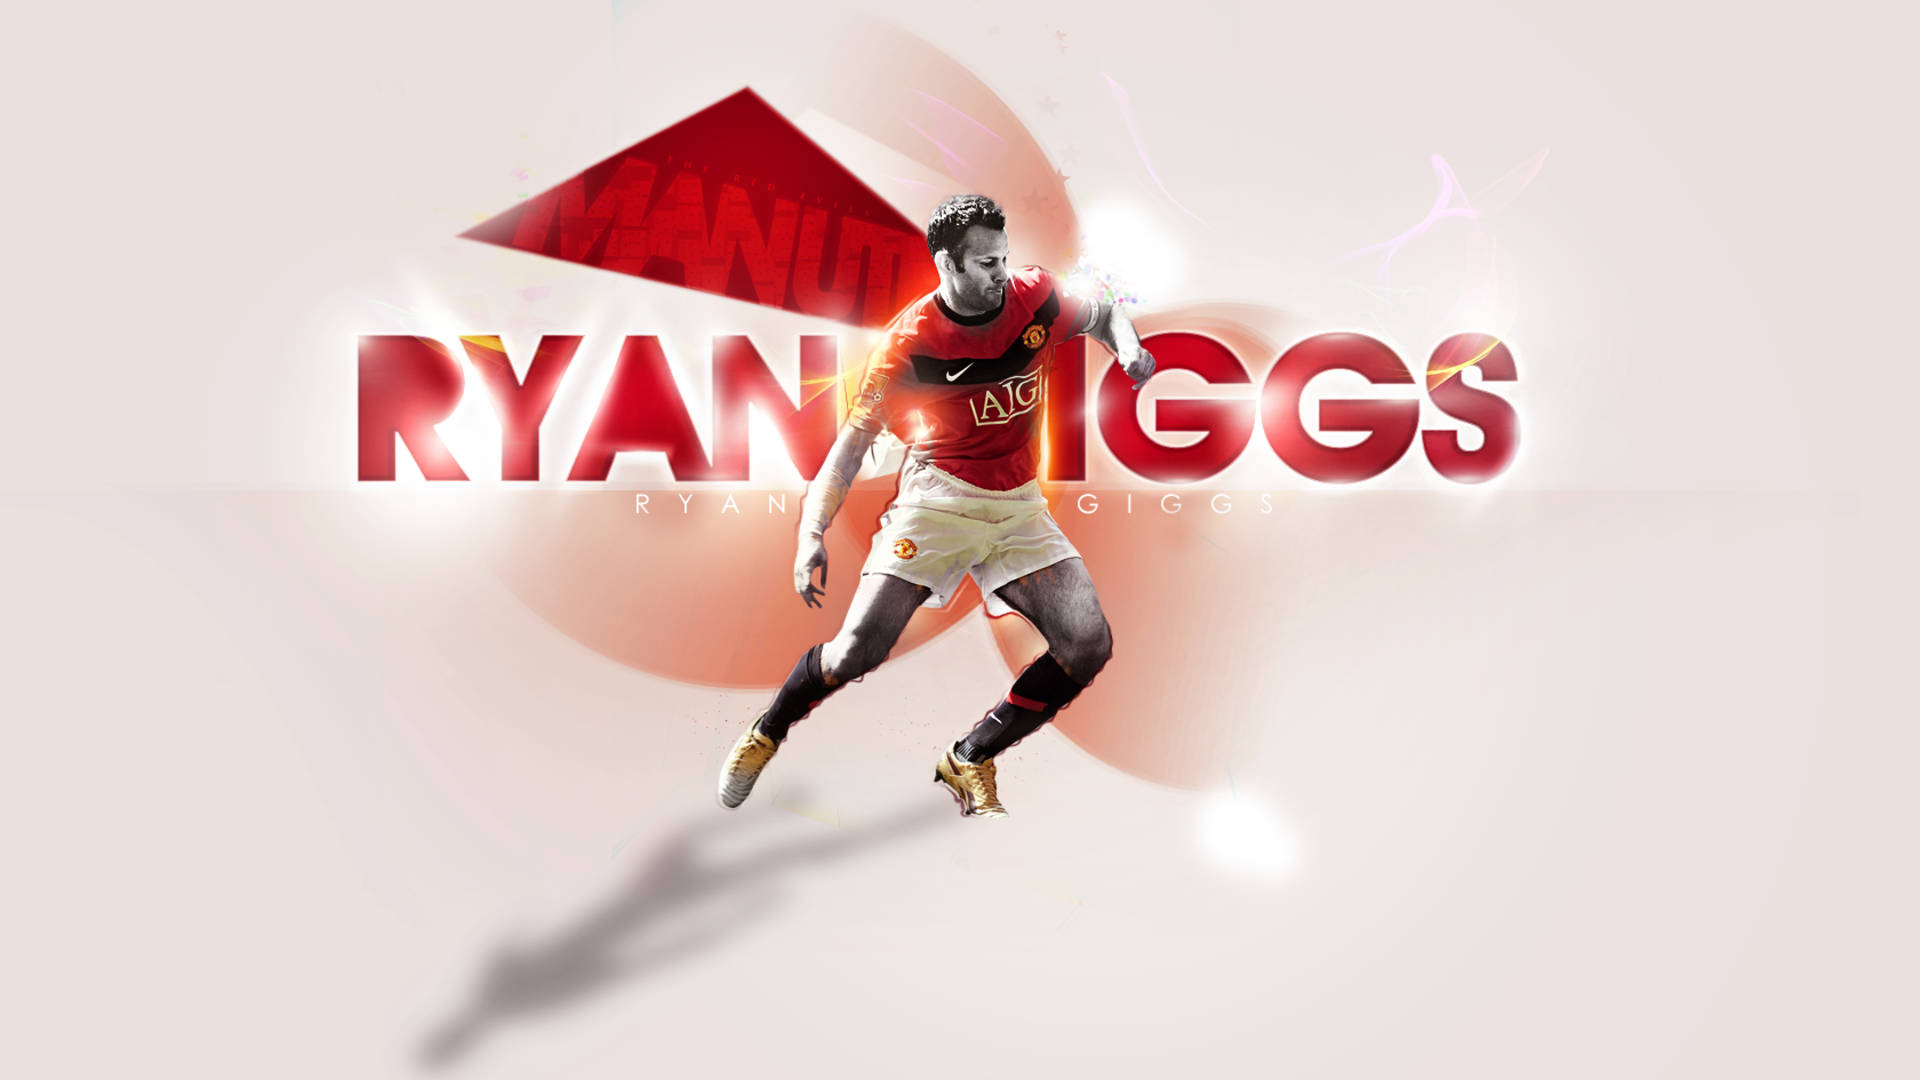 Cool Ryan Giggs Football